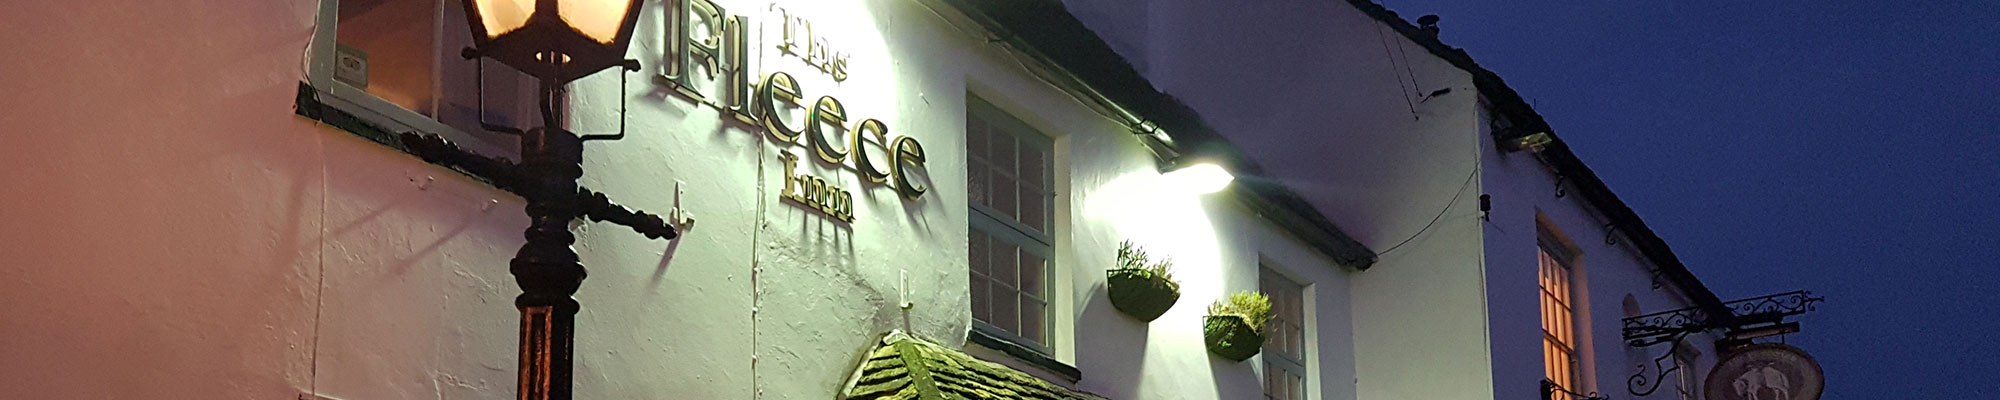 The Fleece Inn Hillesley - Great beer, friendly service